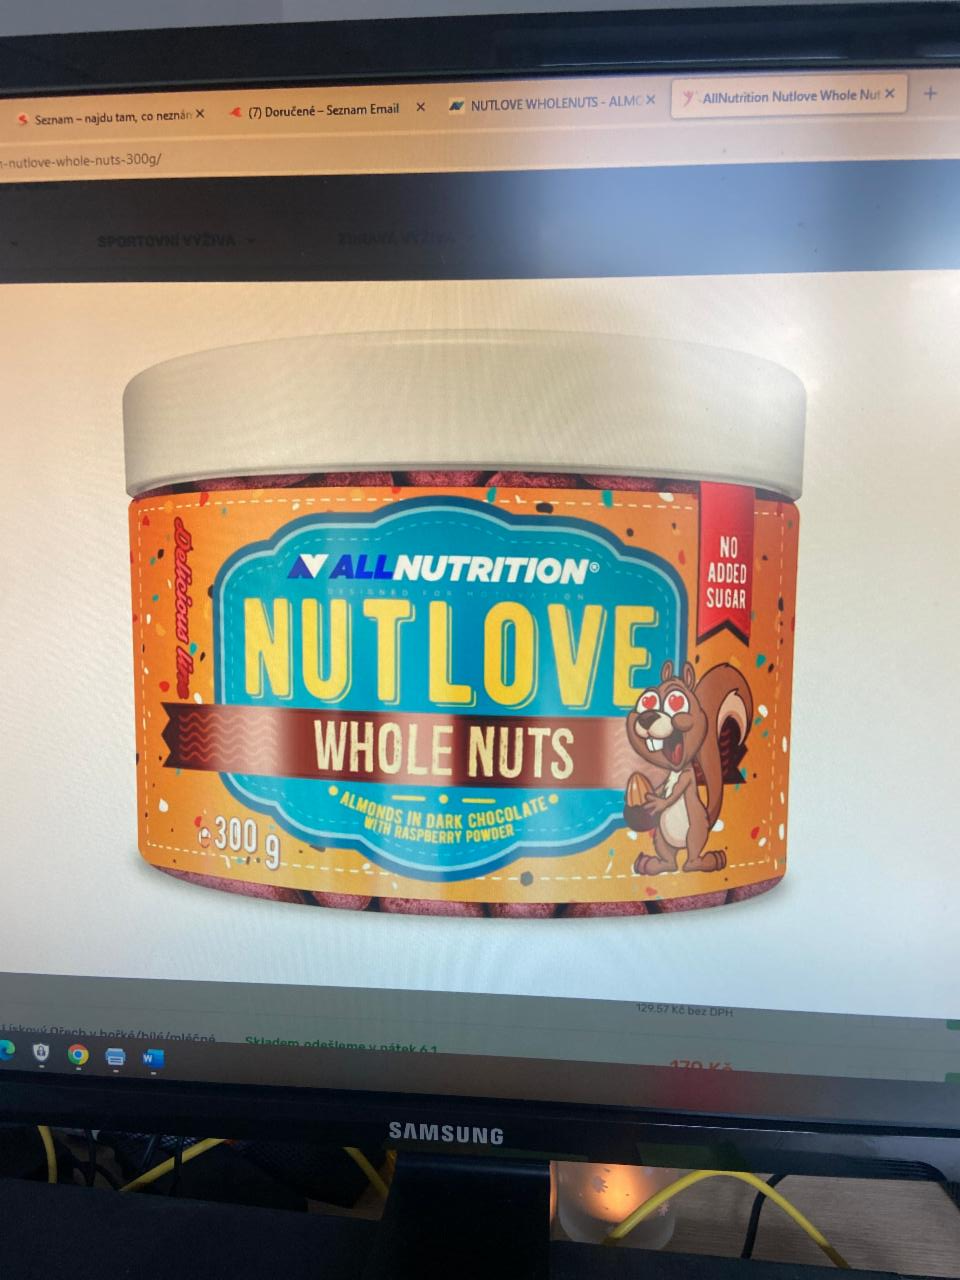 Fotografie - Nutlove Whole Nuts Almonds In Dark Chocolate With Raspberry Powder Allnutrition